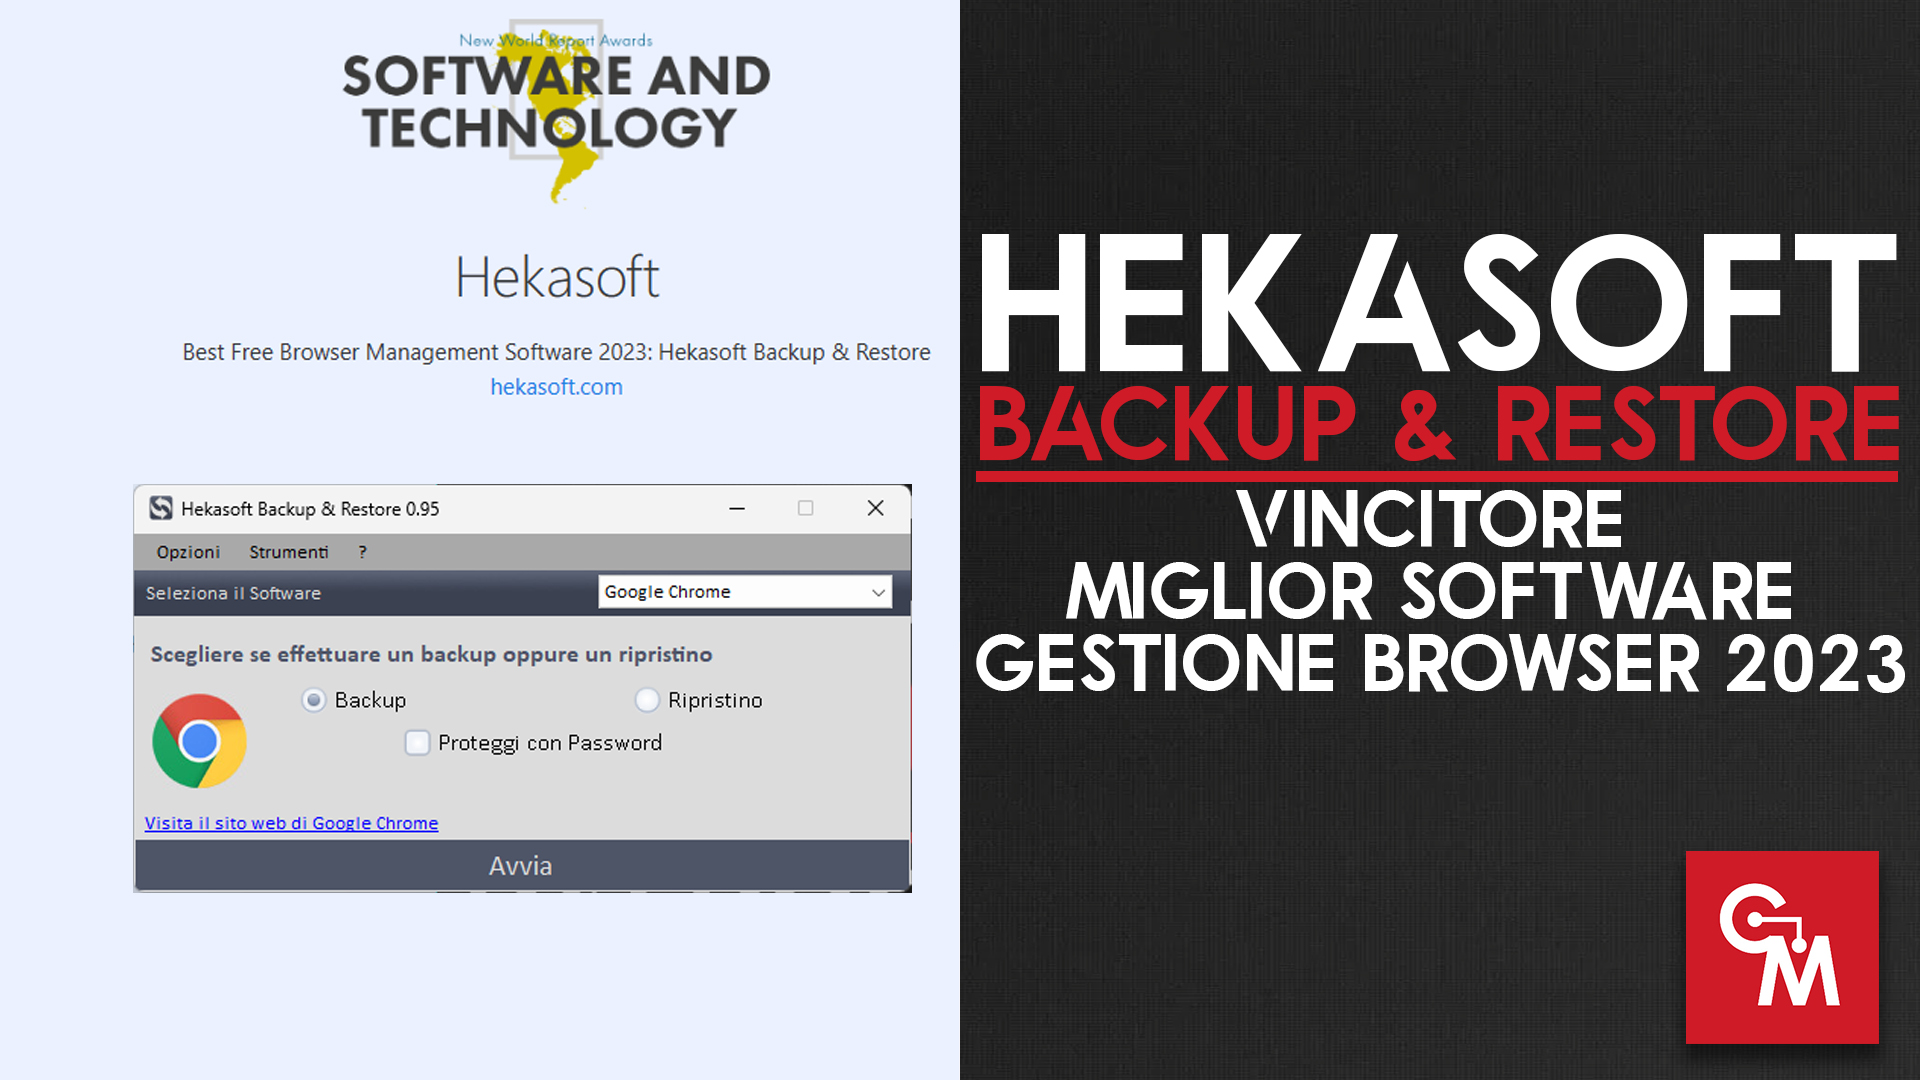 Hekasoft Backup & Restore Vincitore Miglior Software Gestione Browser 2023